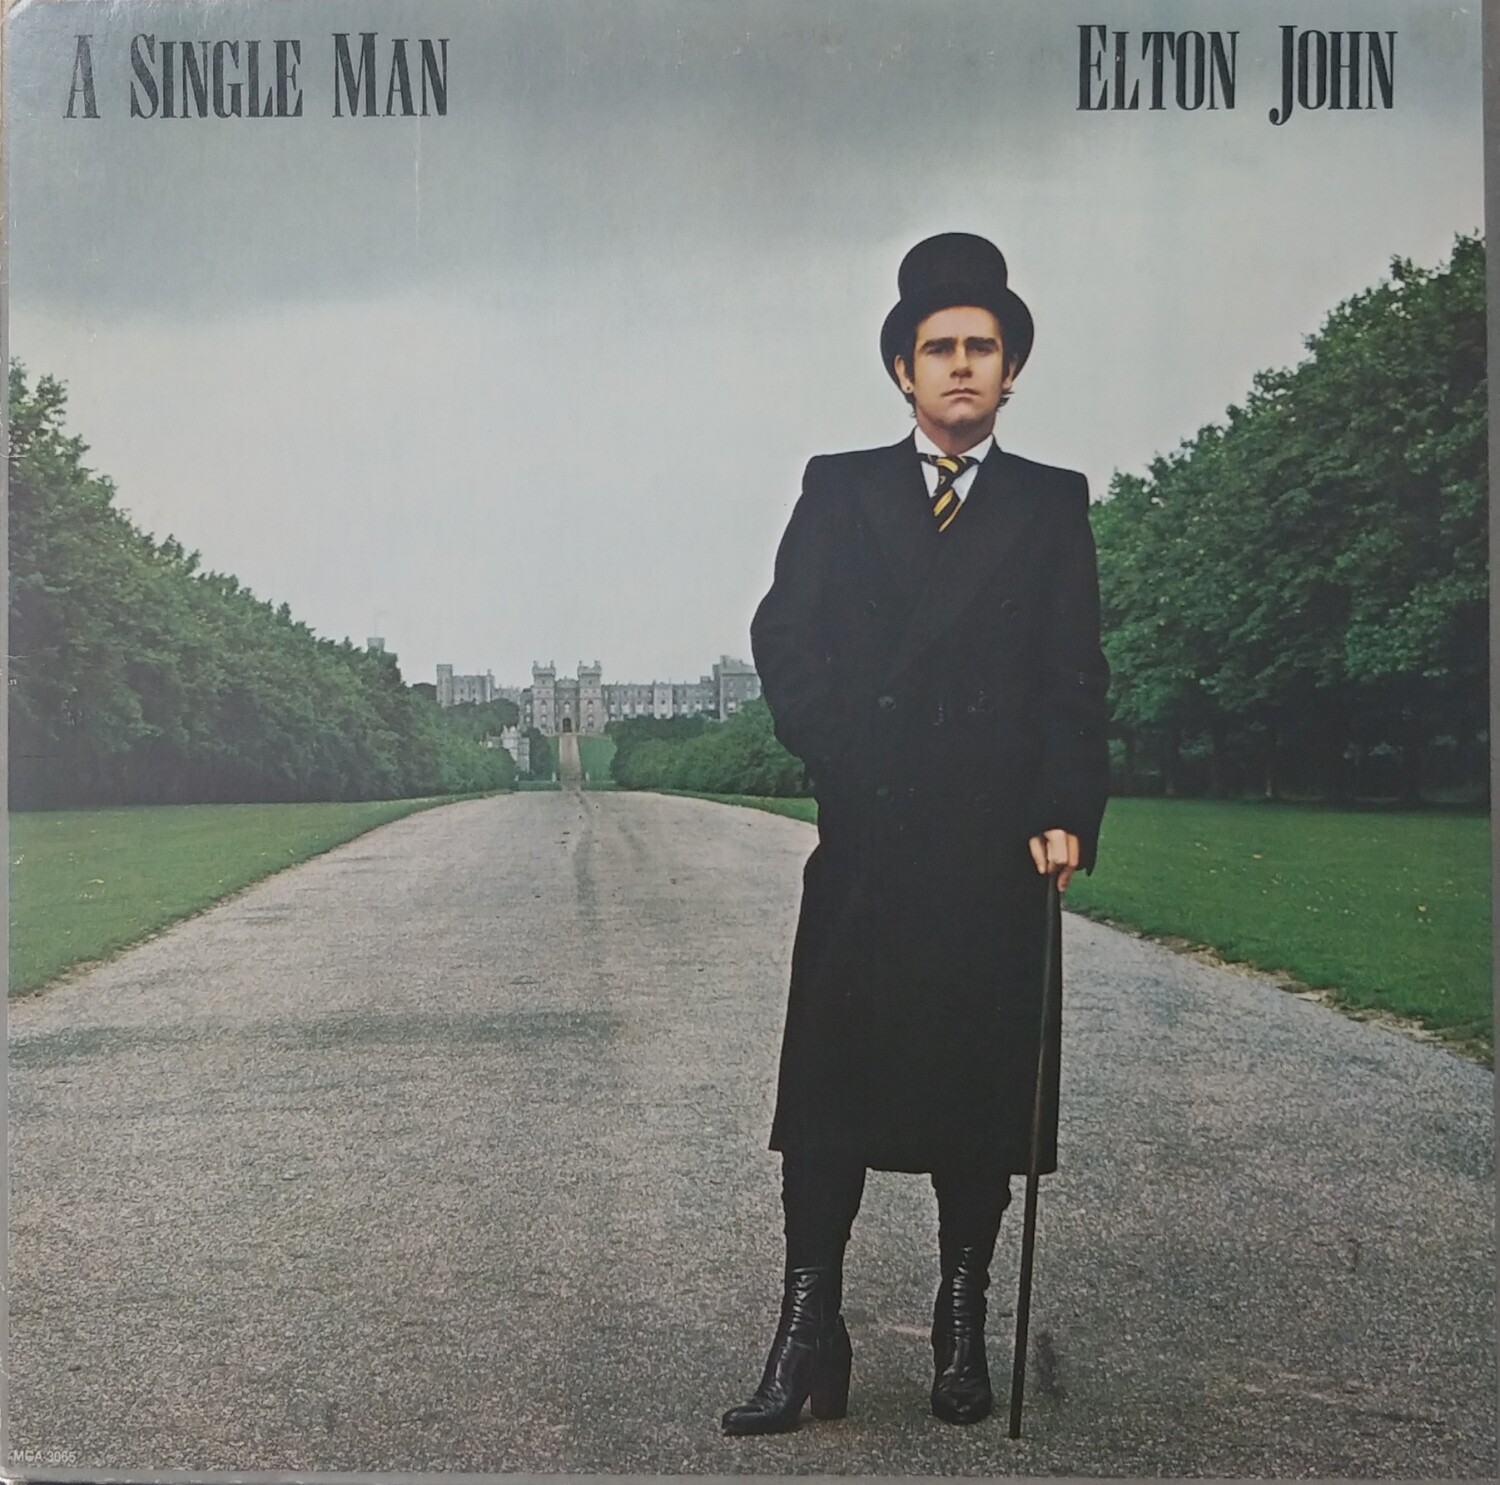 Elton John - A single man